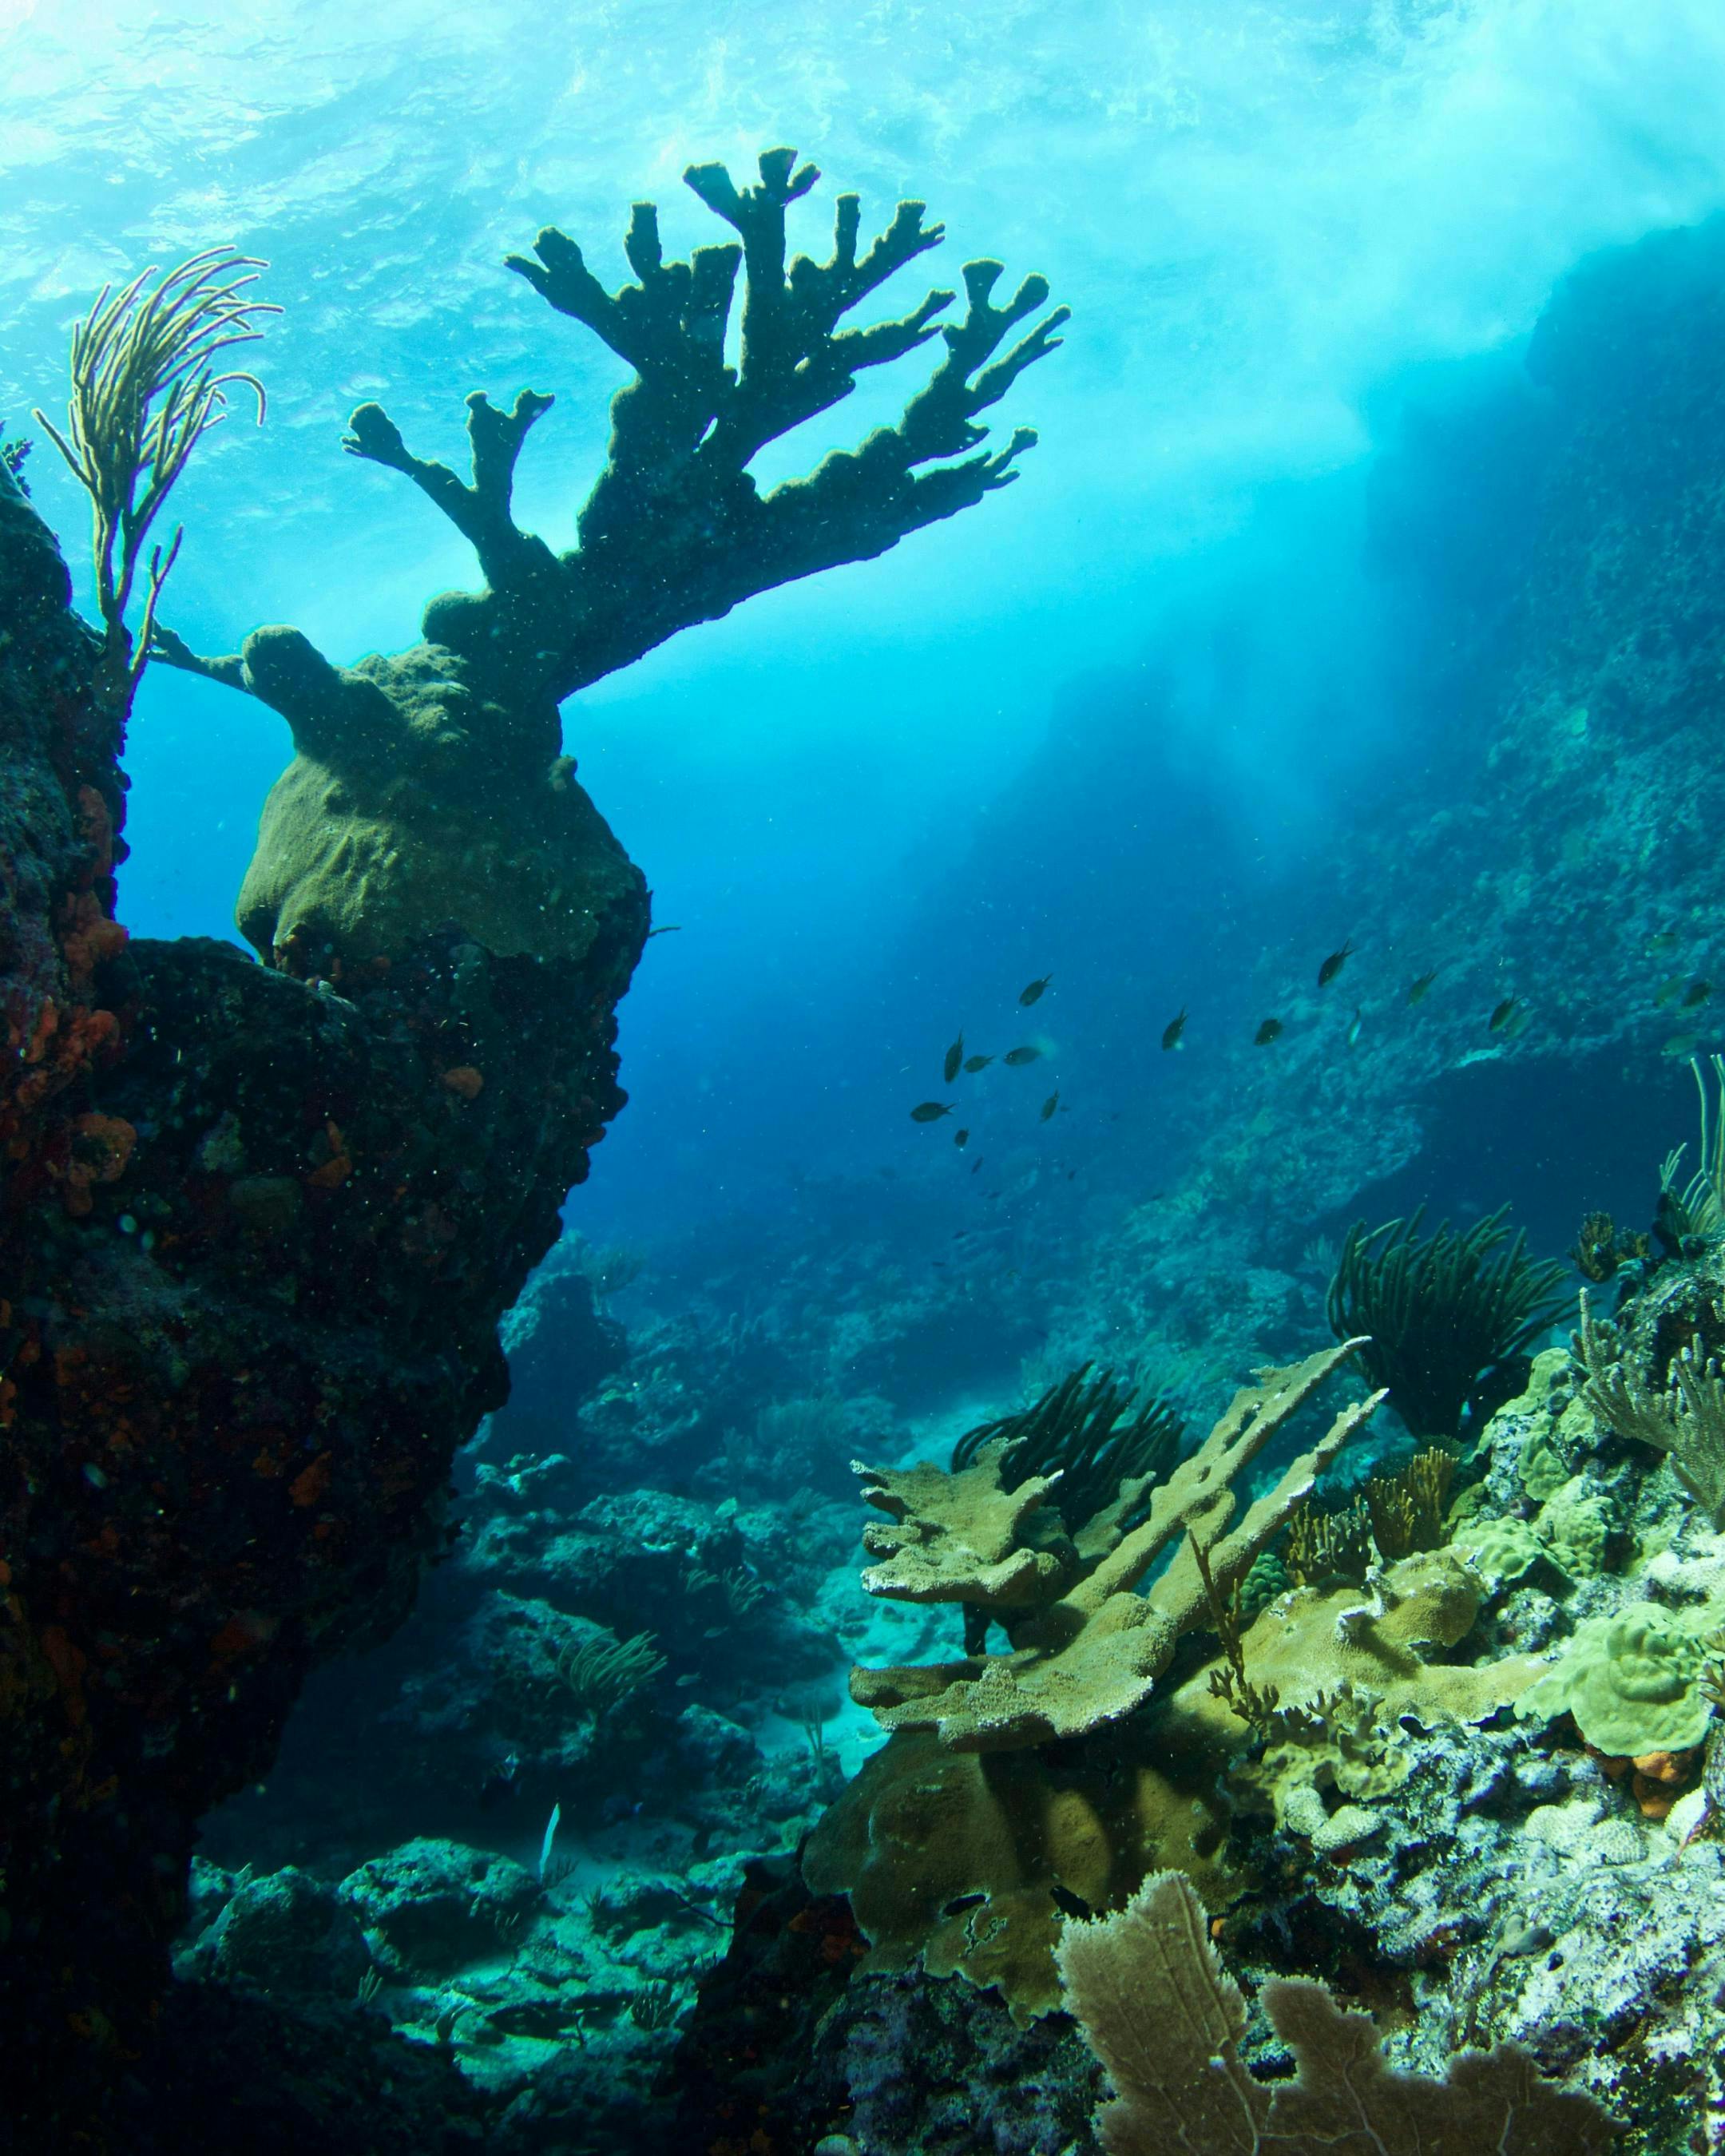 nature outdoors water aquatic reef sea sea life coral reef underwater fish